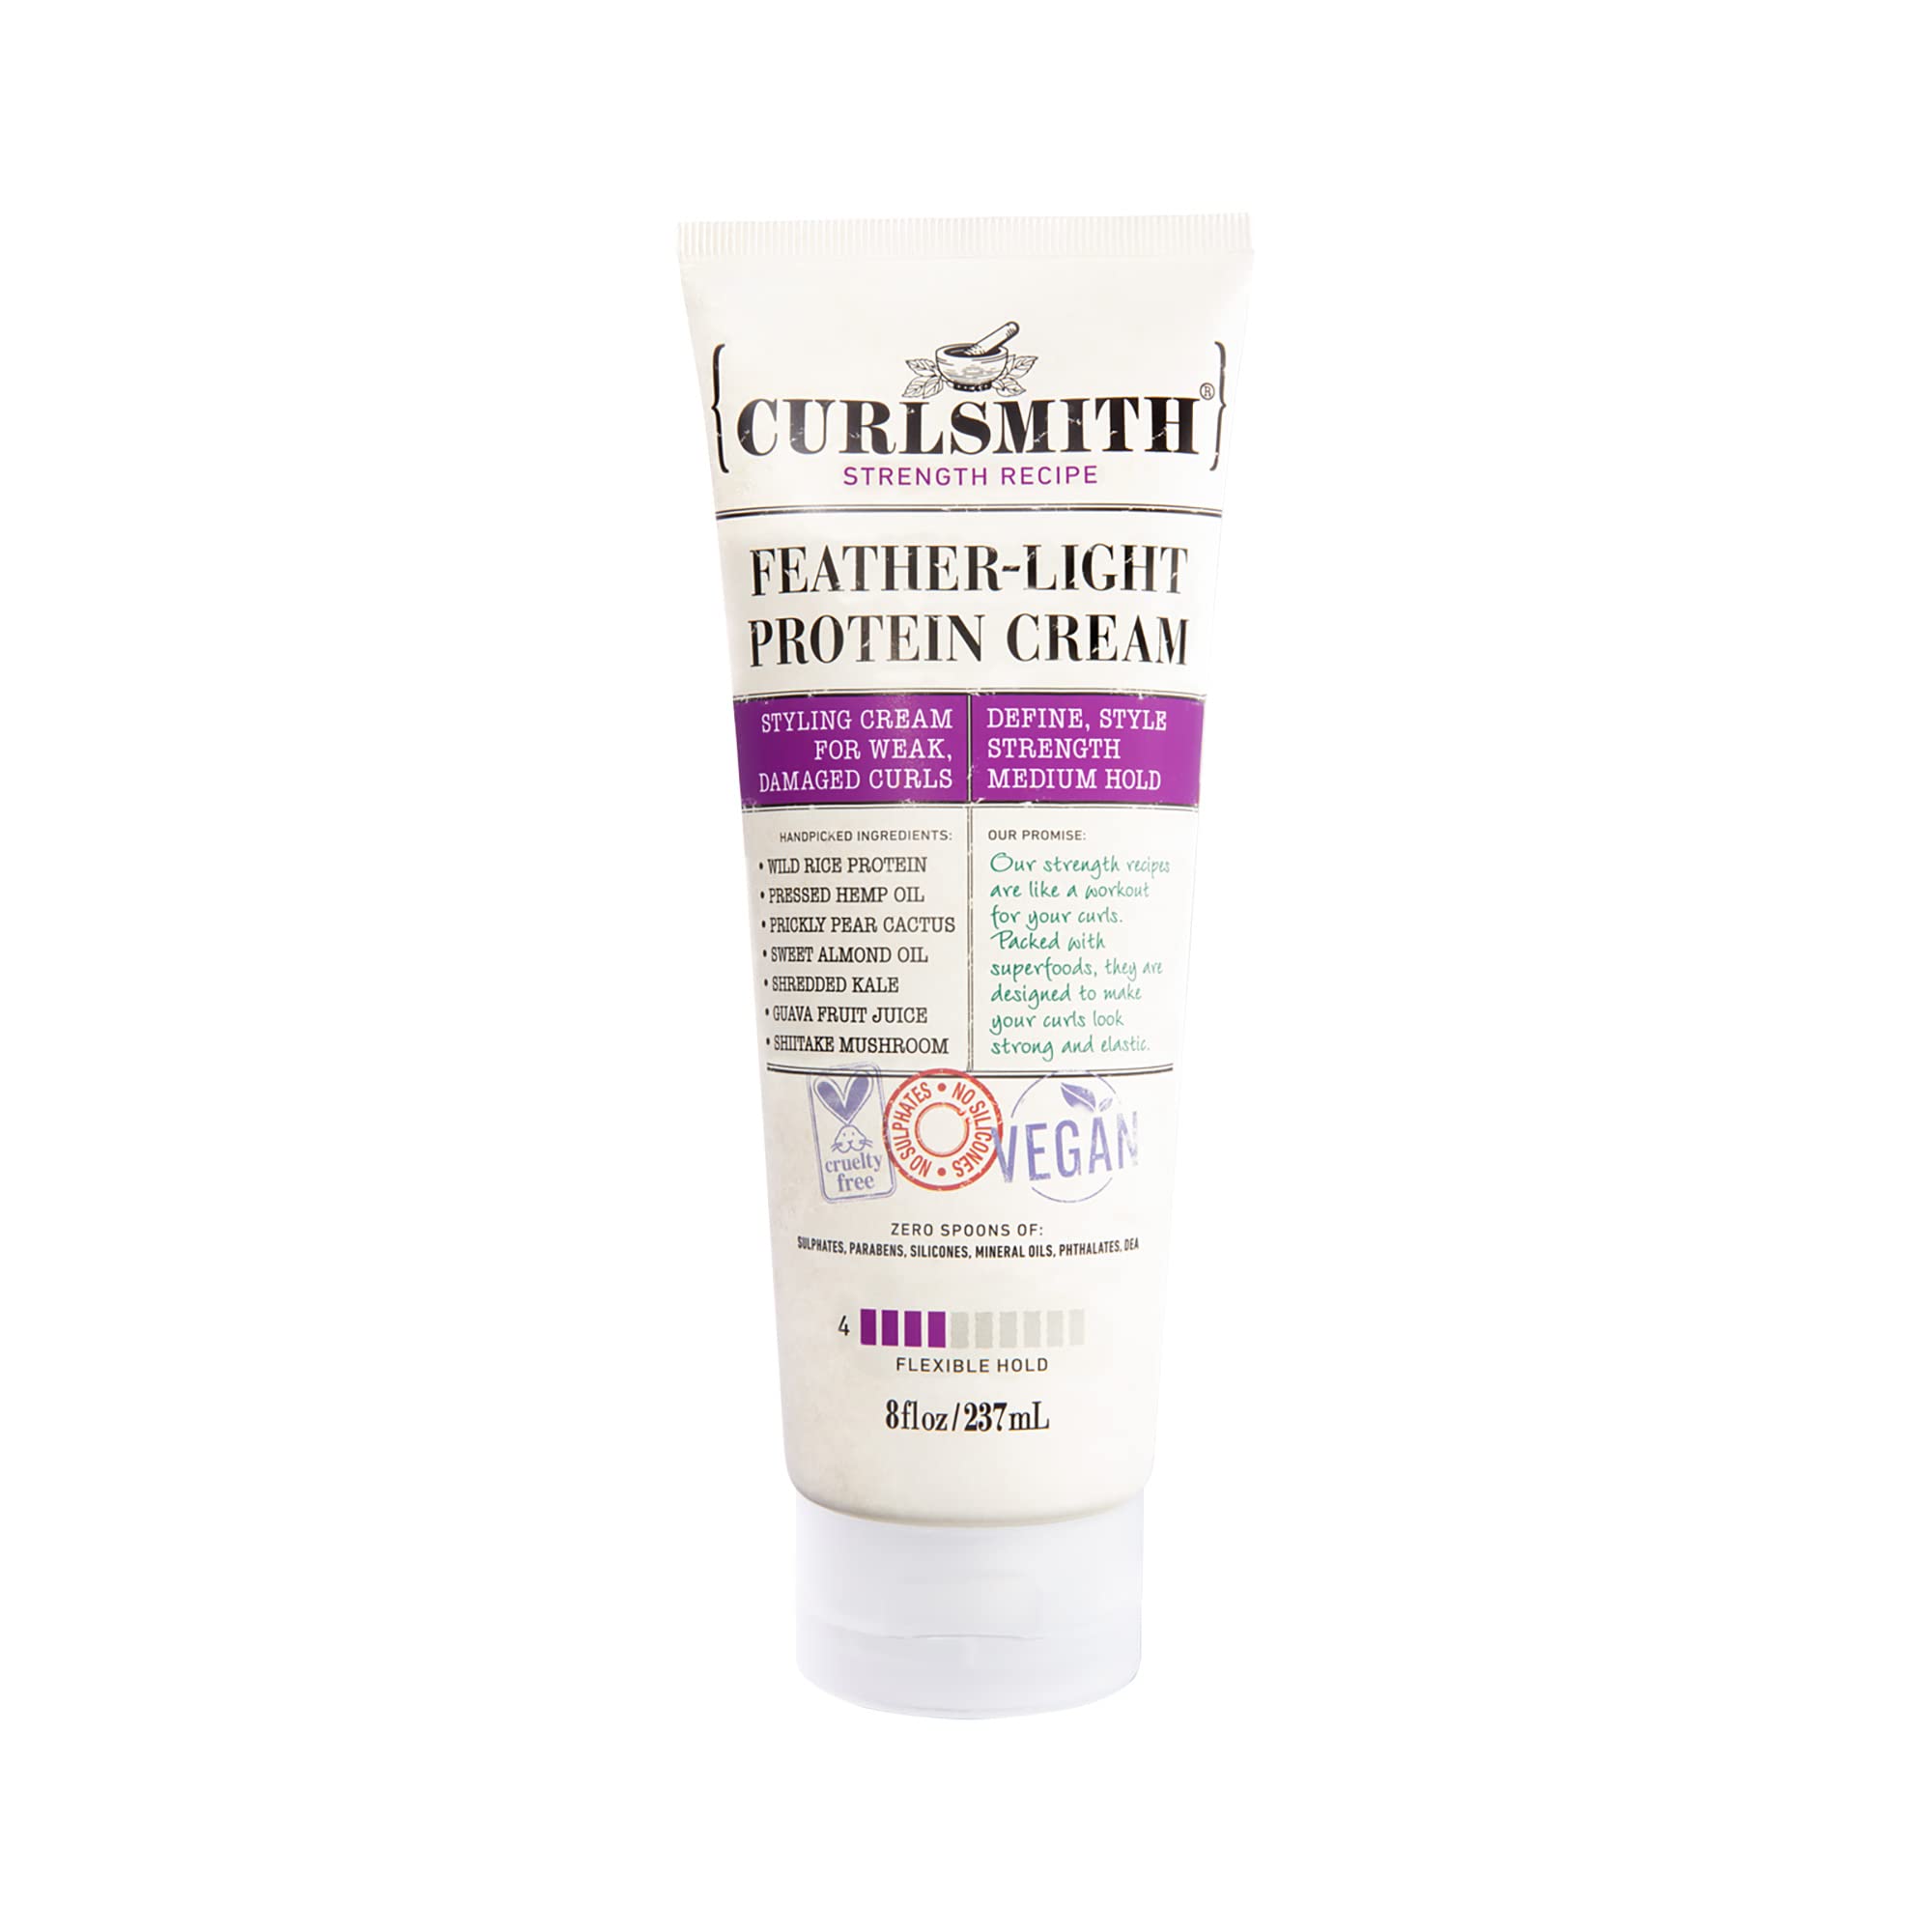 CURLSMITH - Feather-Light Protein Cream, Hair Styling Cream for Weak, Damaged Curls, Medium Hold (8 fl oz)